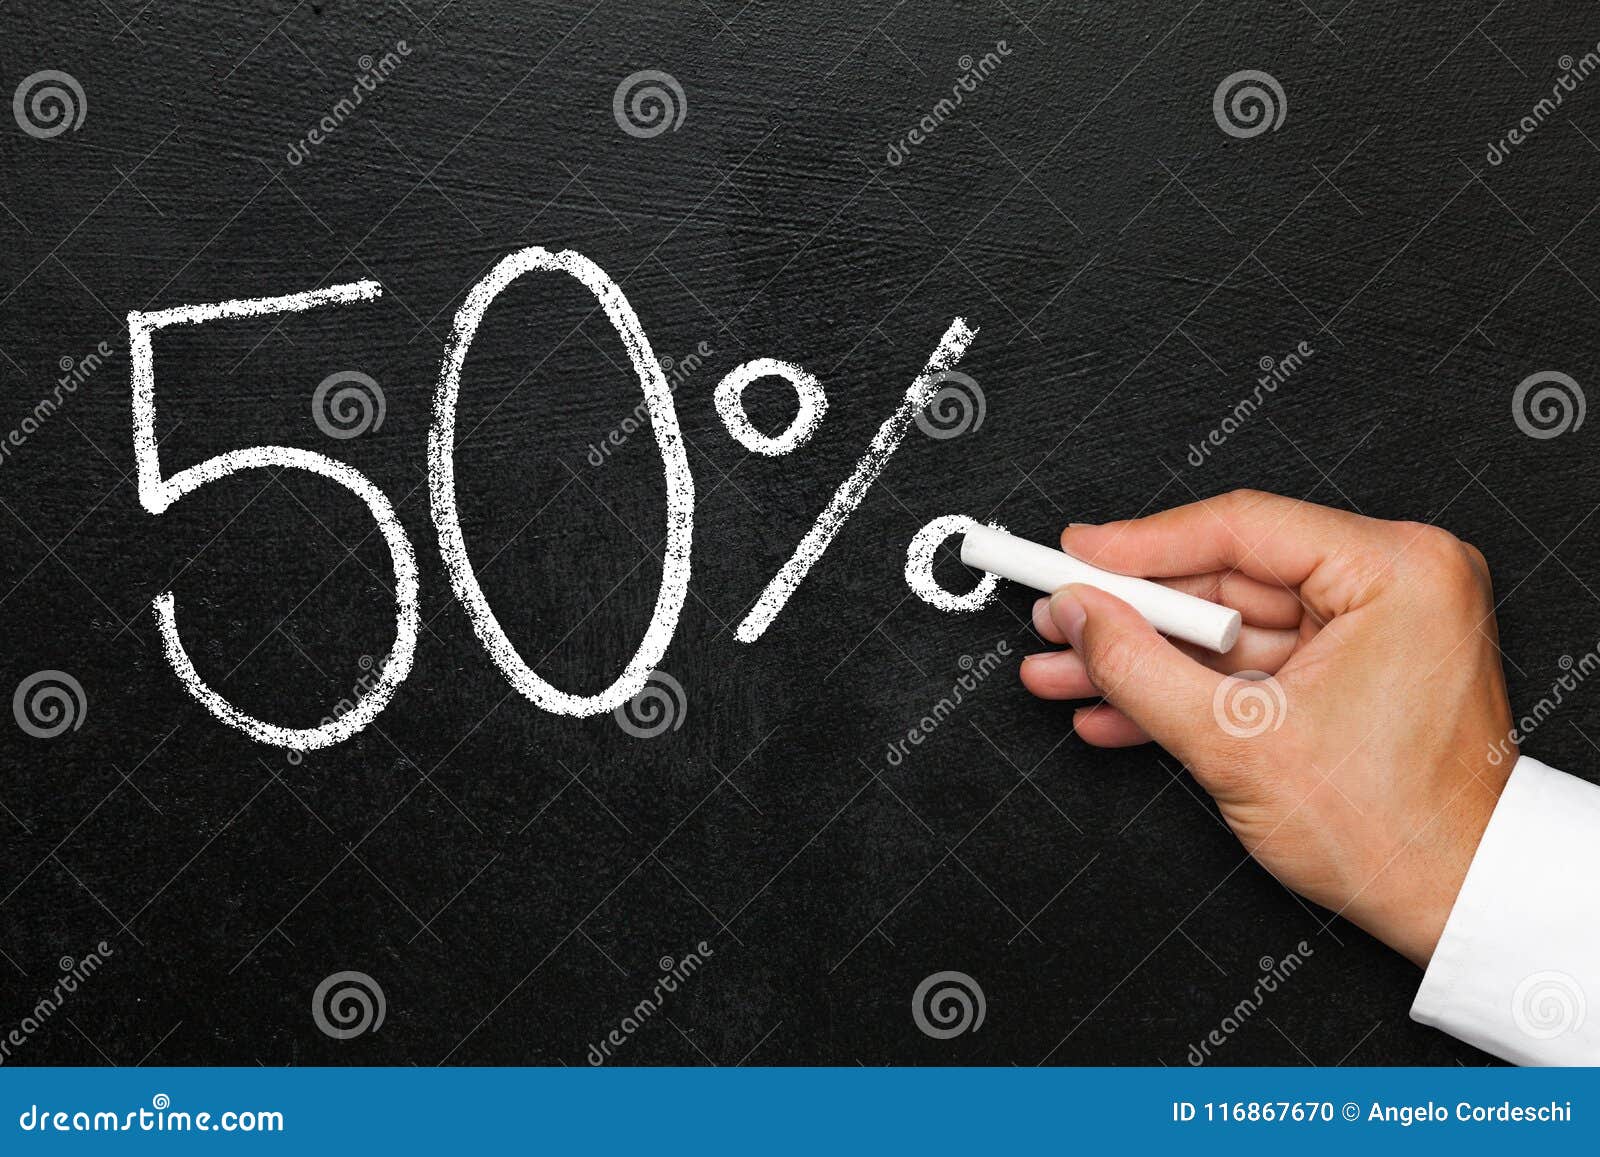 fifty percent discount or increase on chalk blackboard